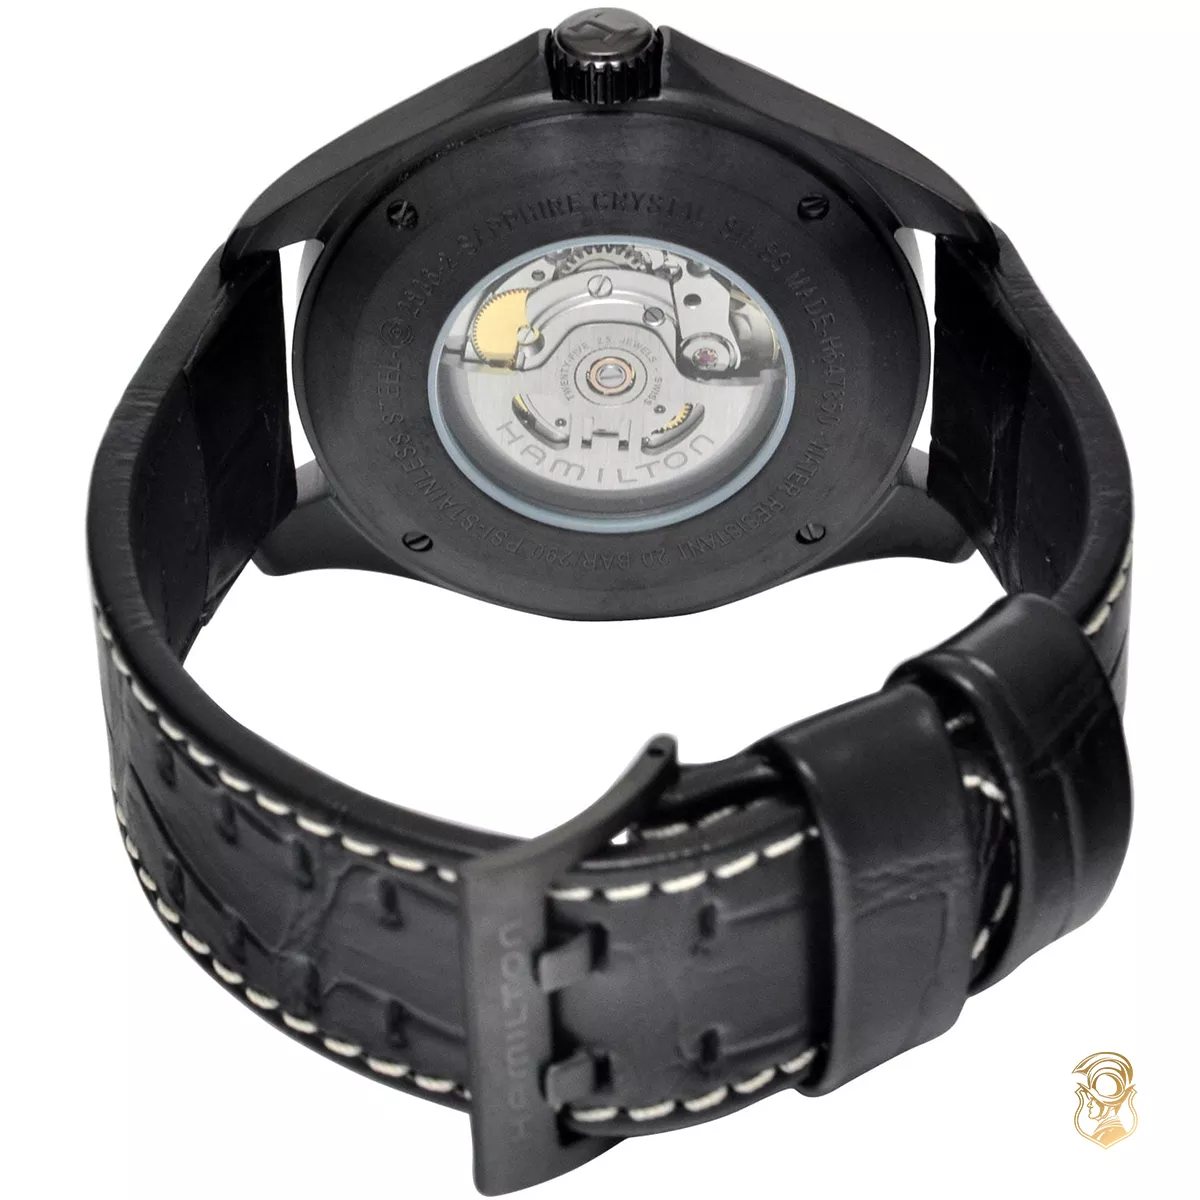 HAMILTON Khaki King Pilot Automatic Watch 46mm